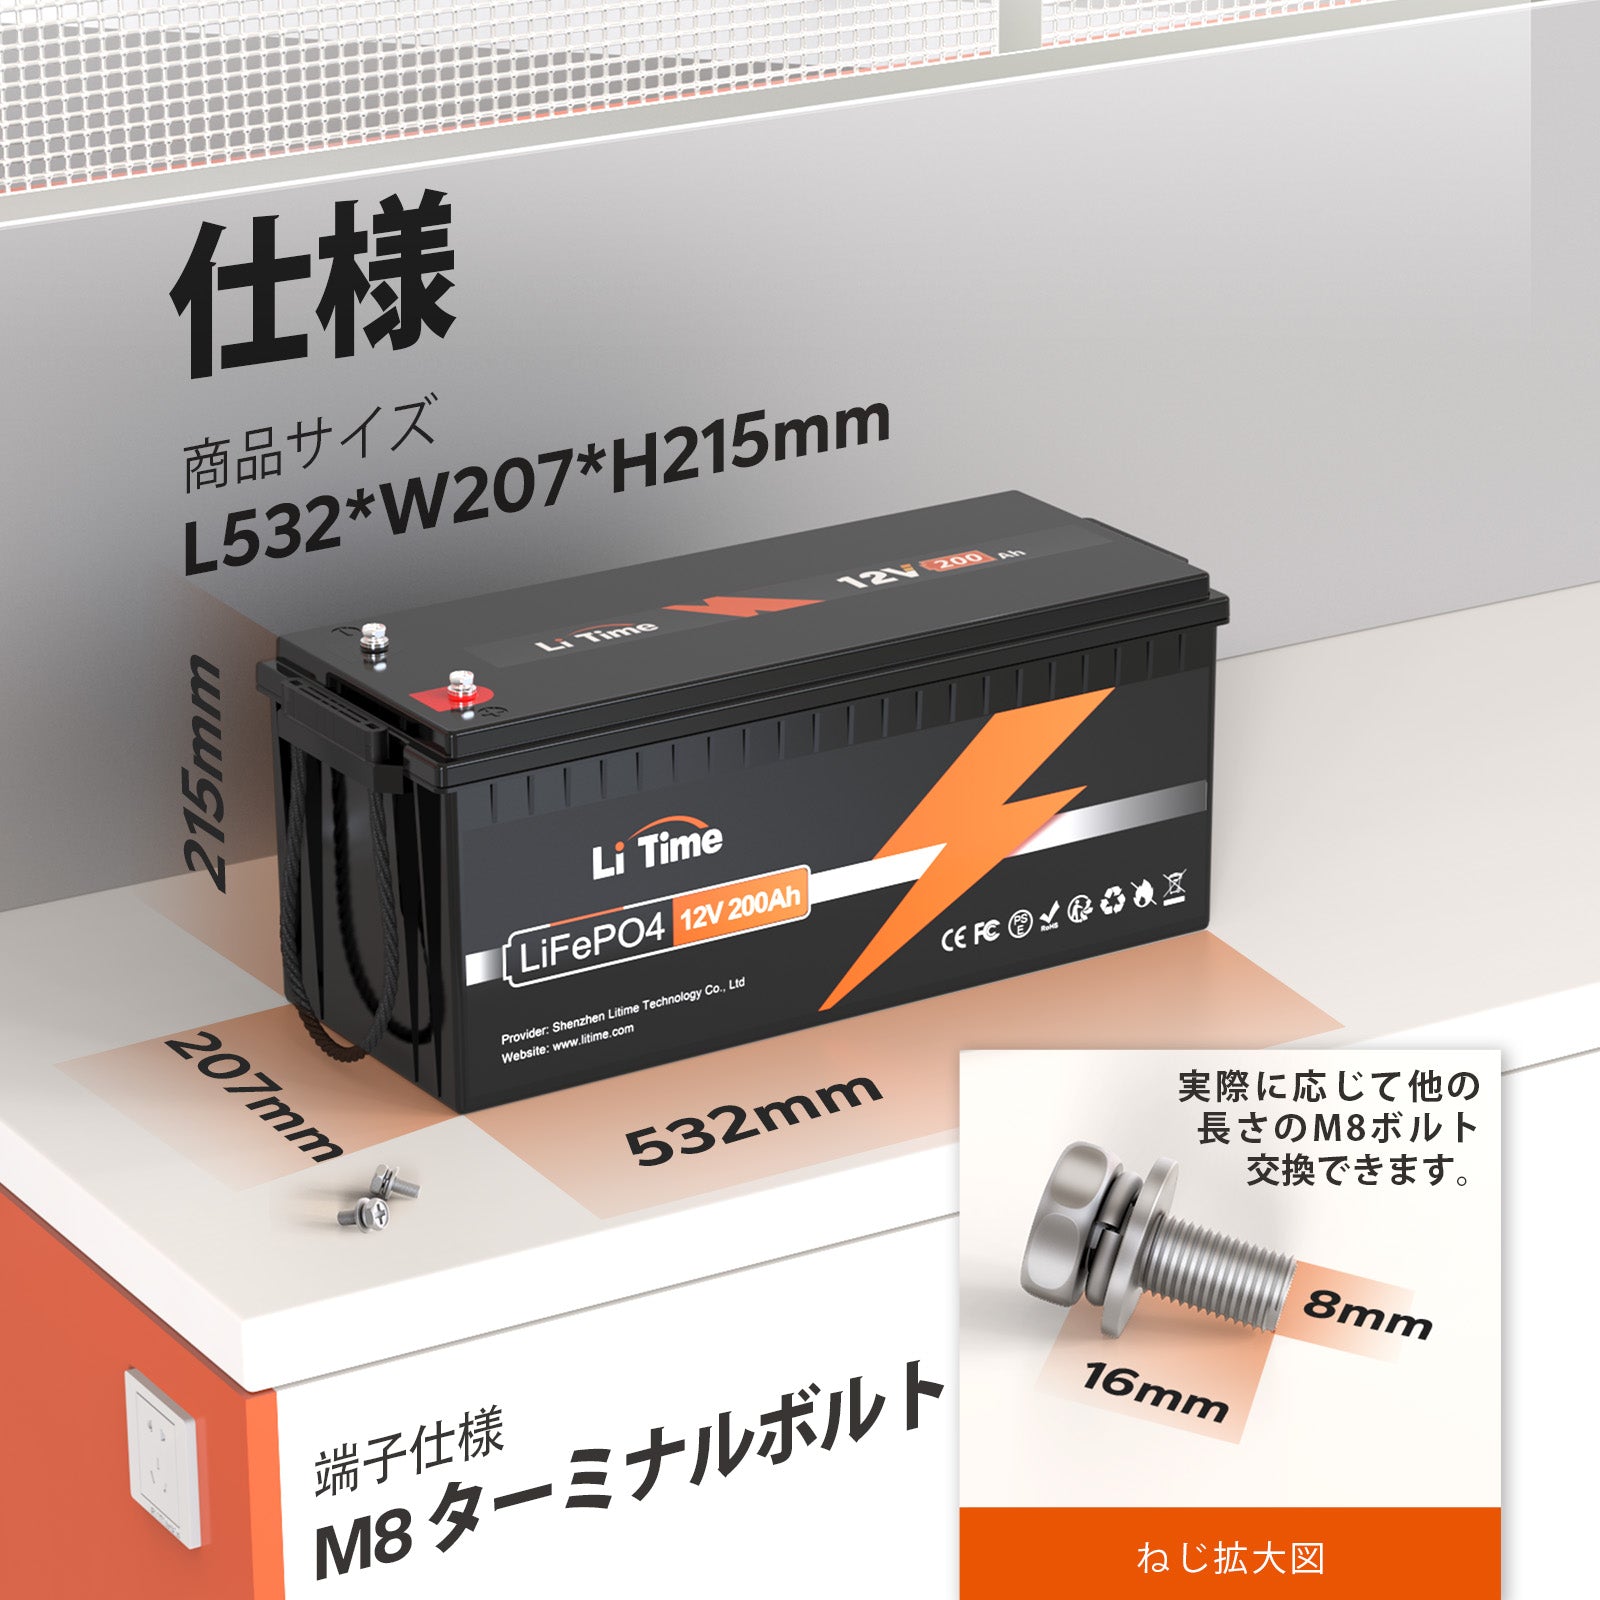 LiTime 12V 200Ah LiFePO4 リン酸鉄リチウムイオンバッテリー 内蔵100A 